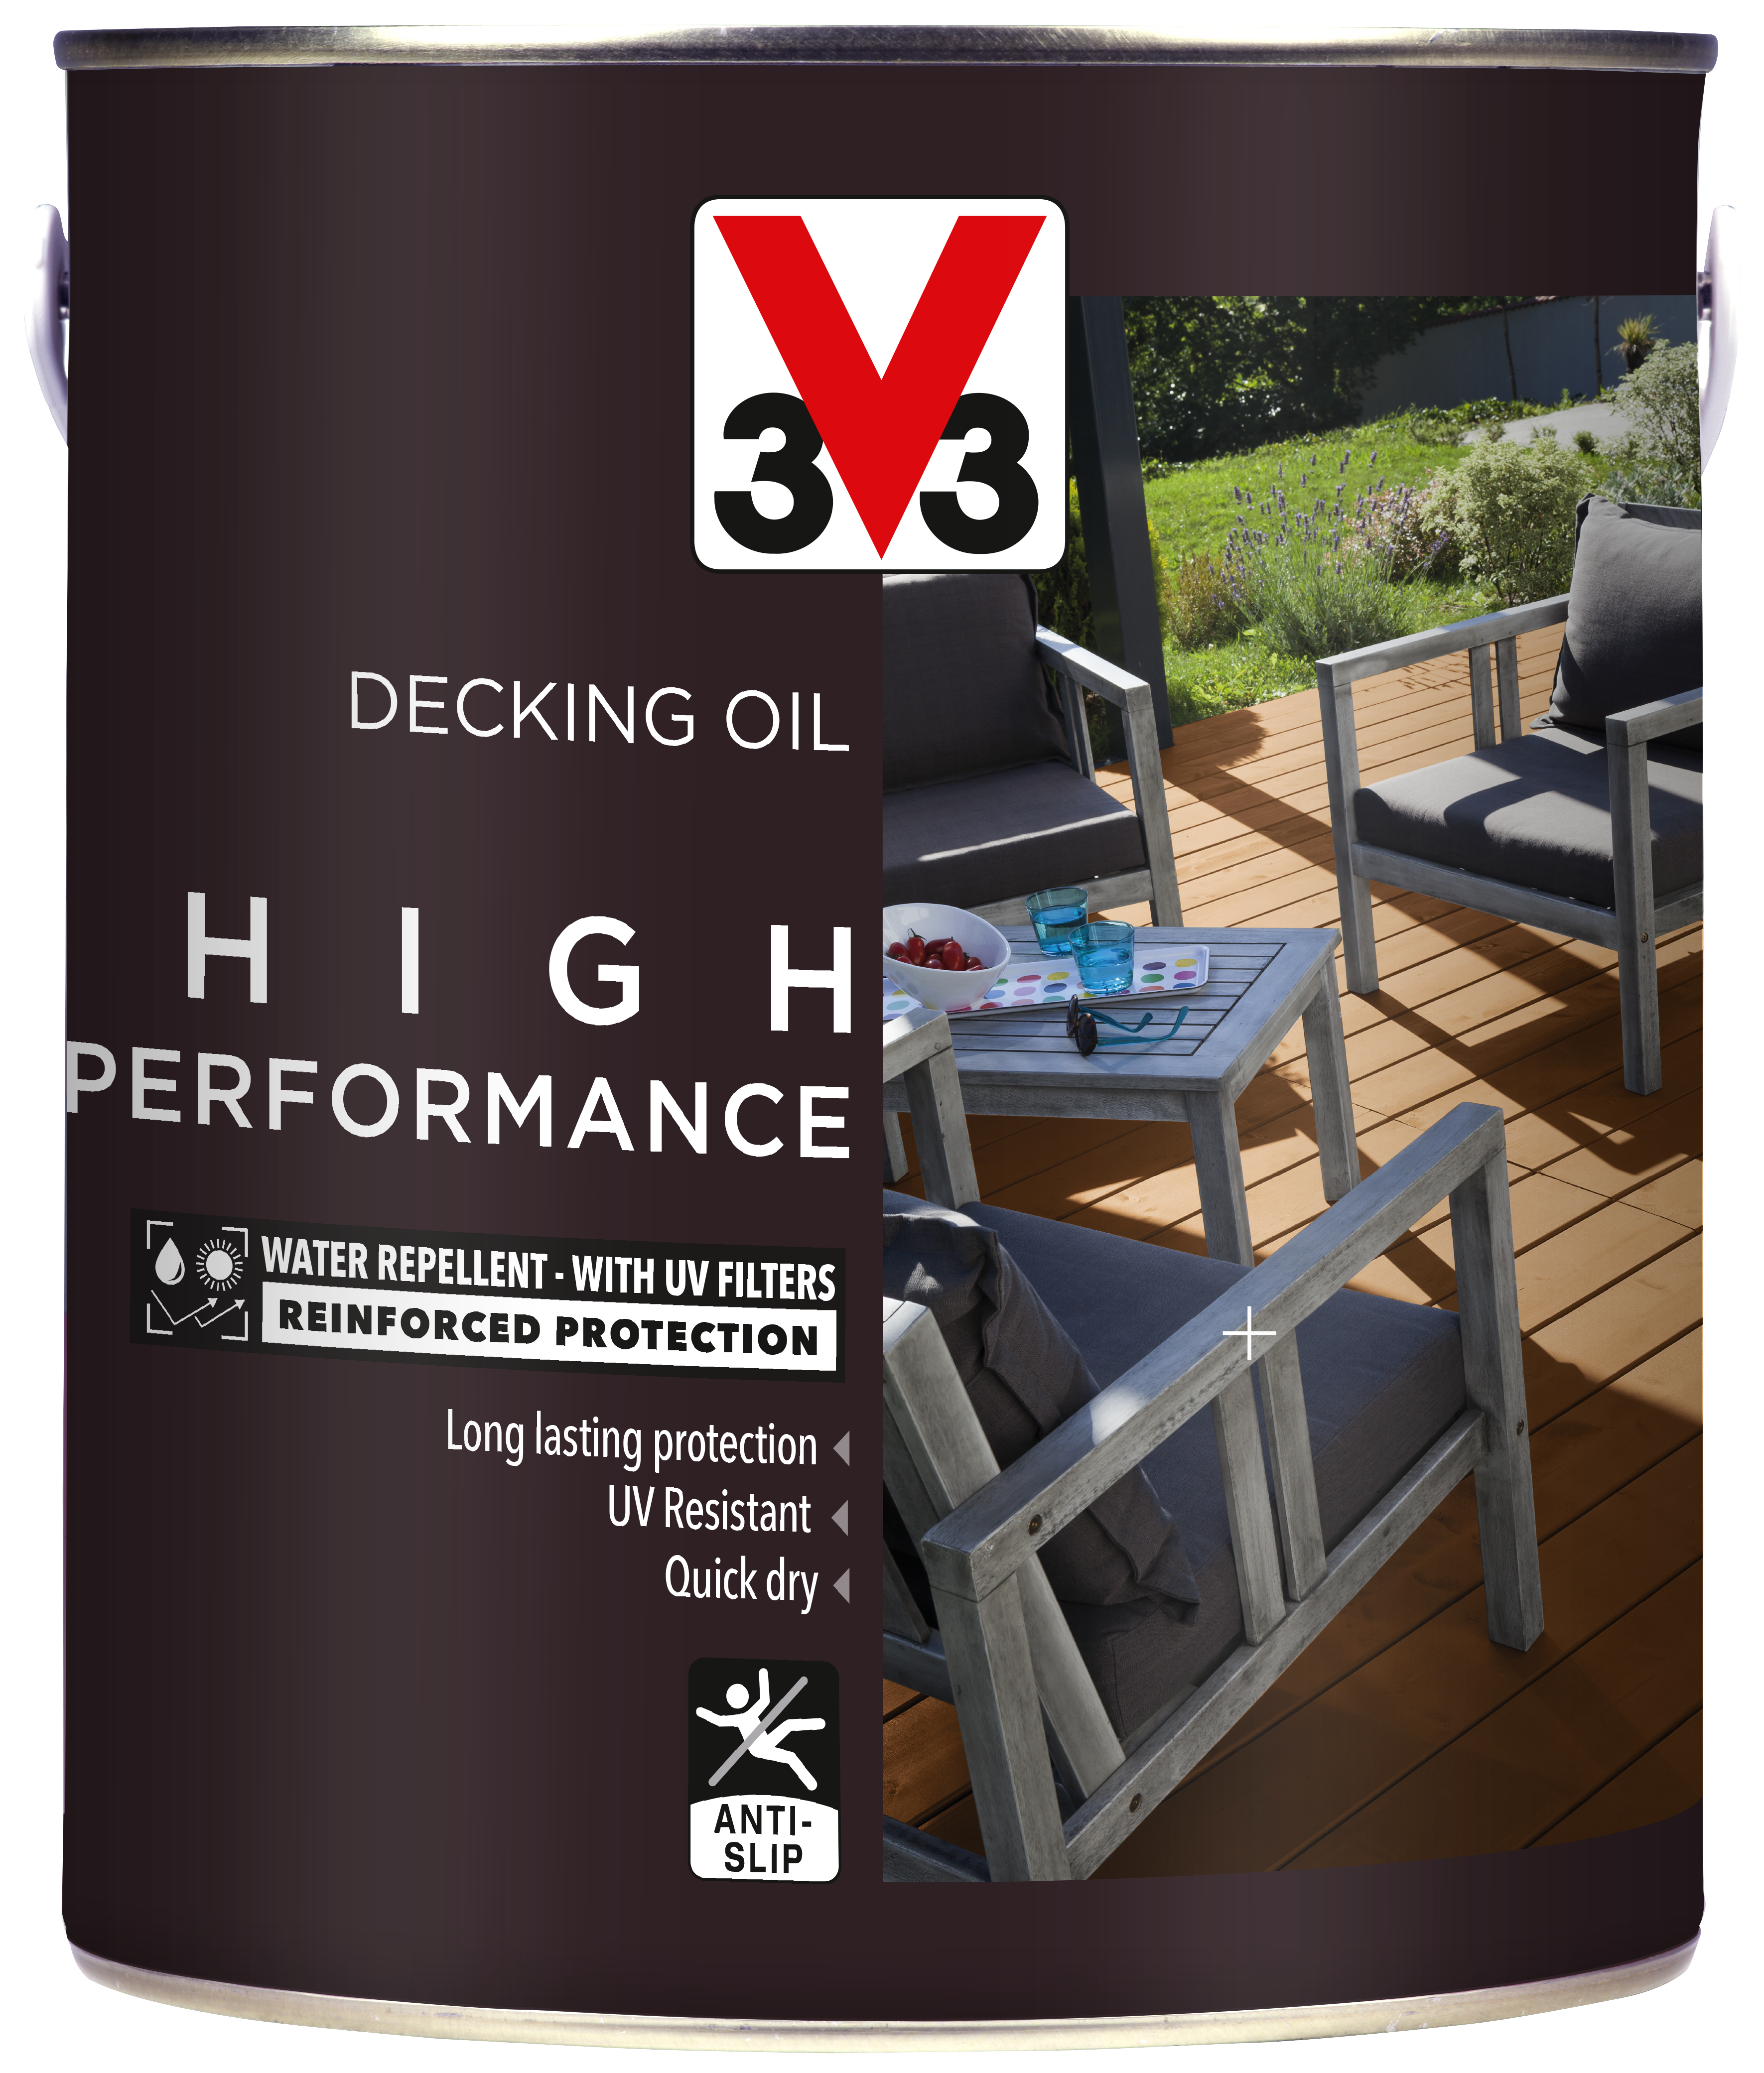 High Performance Decking Oil